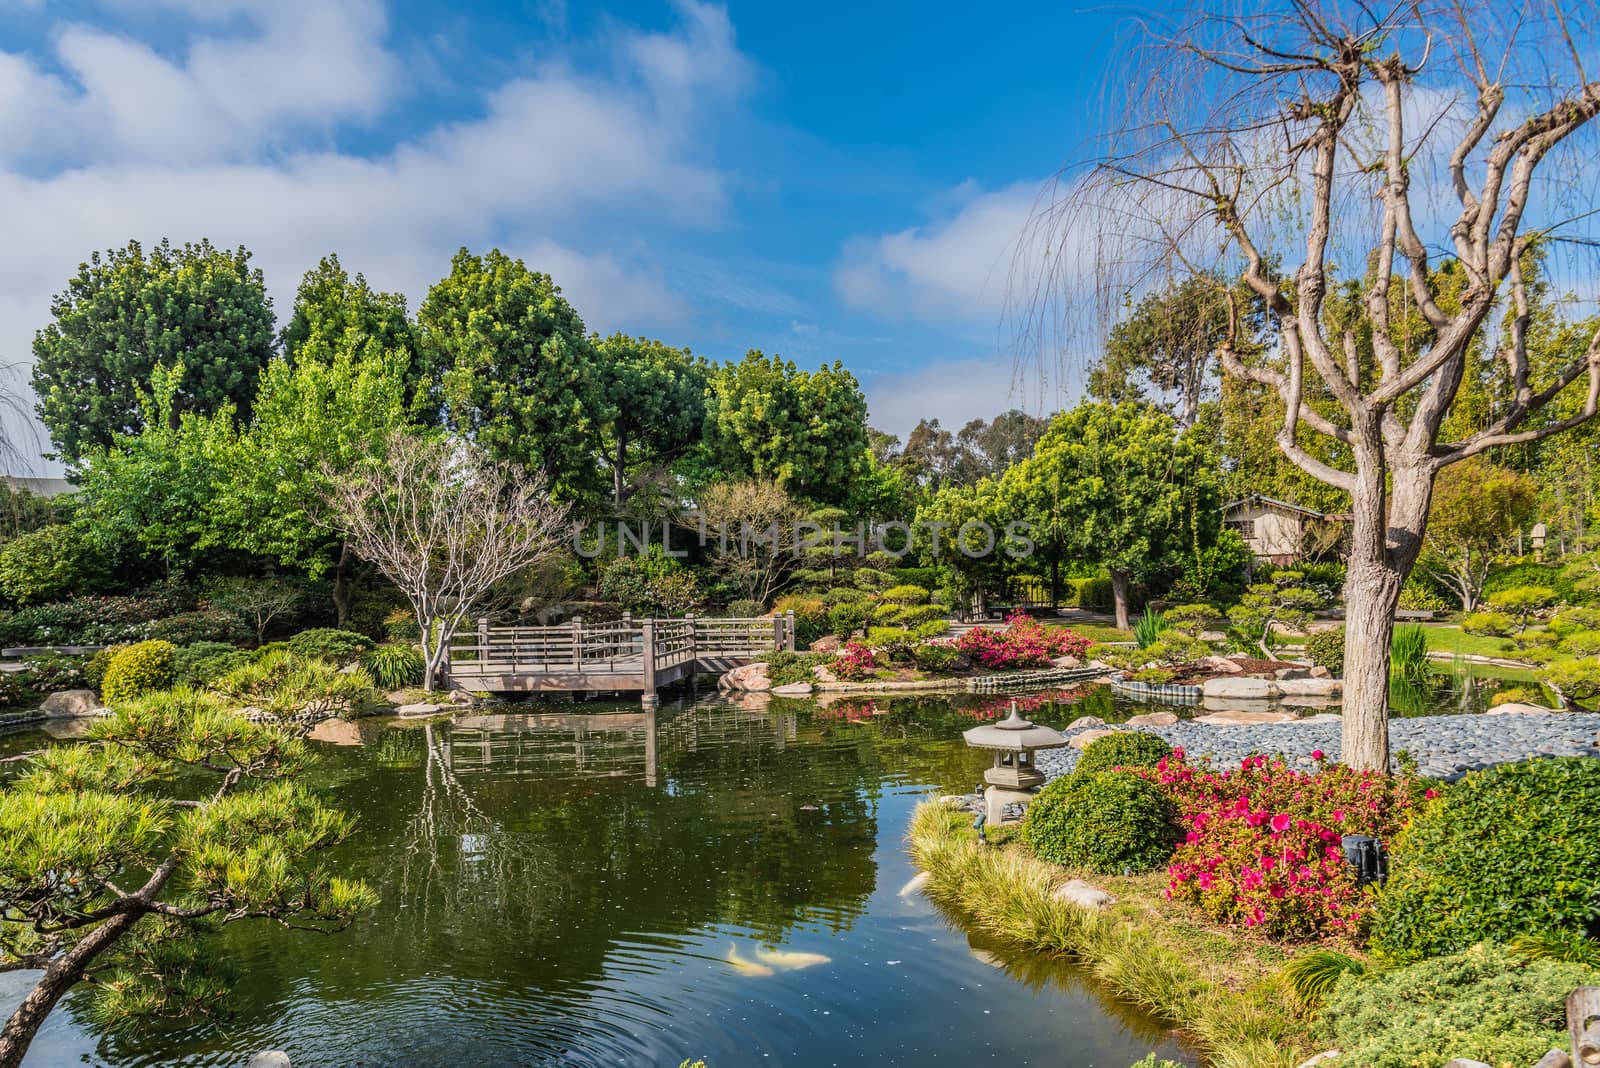 USA Gardens. Pond Bridges. Earl Burns Miller. Japanese Garden. Long Beach Trees Shrubs.